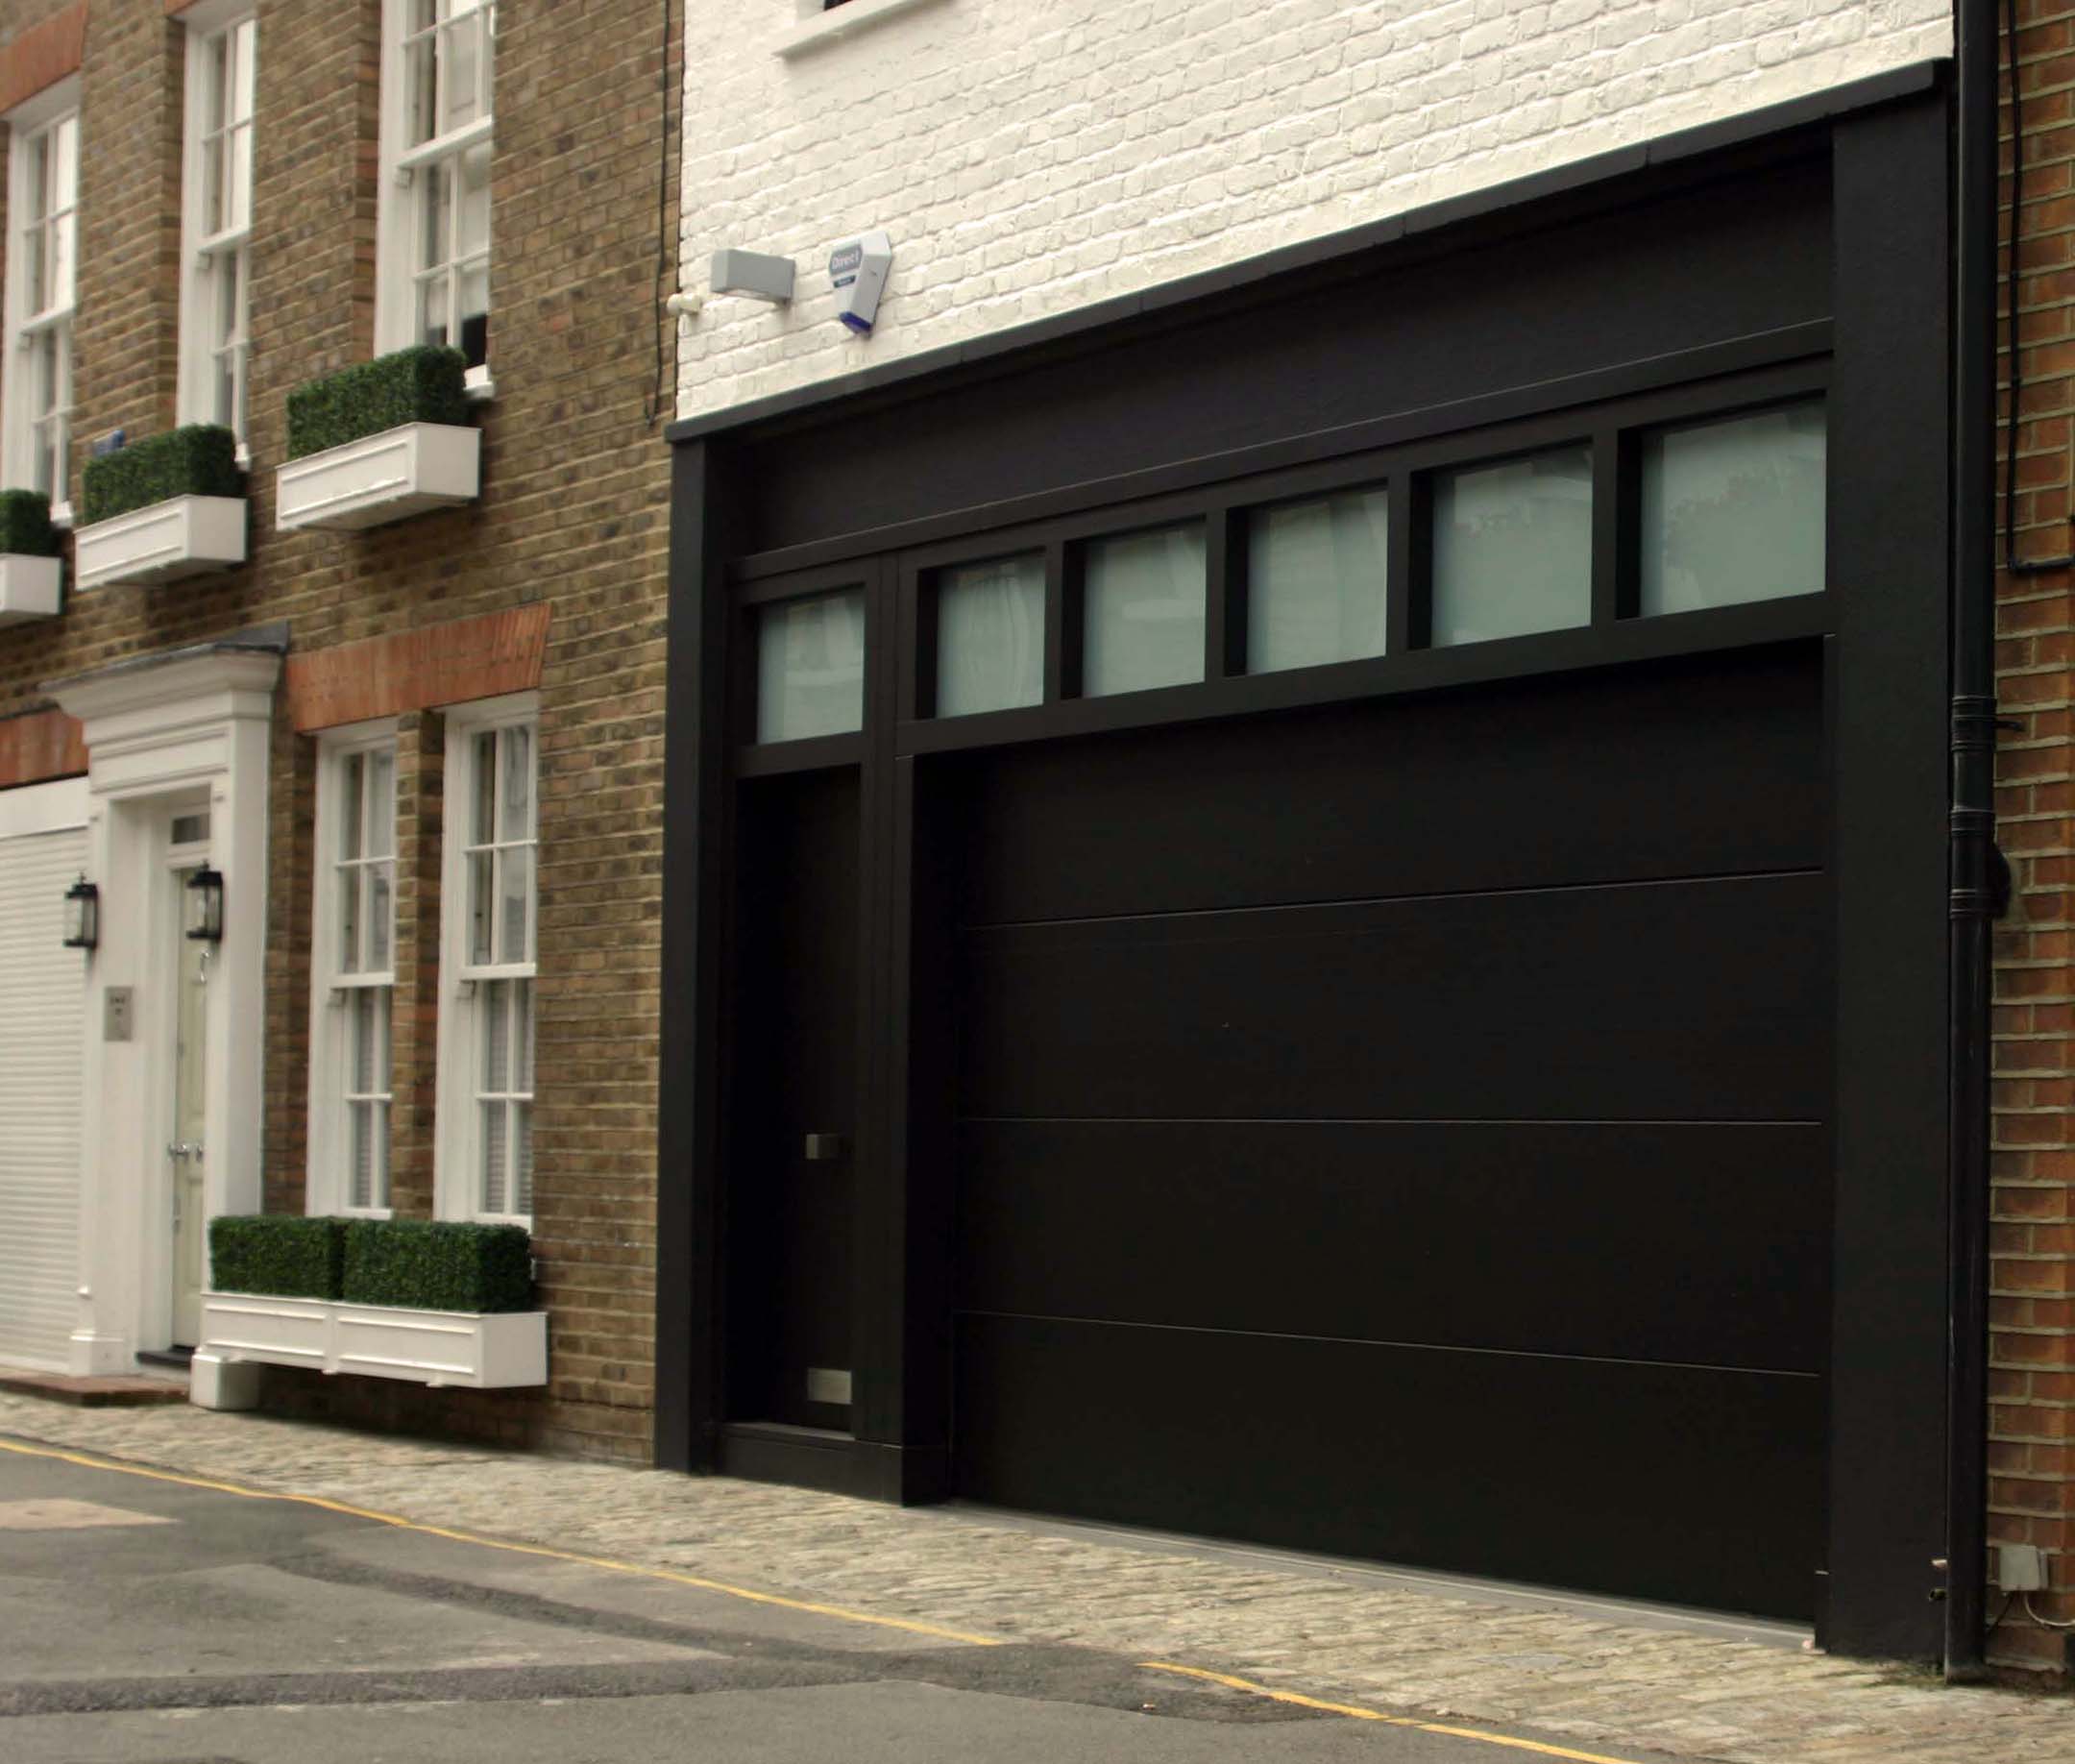 Design Of English Marvelous Garage Design Of A Classic English House With White Painted Brick Walls Black Sliding Garage Door Exterior Elegant Sliding Garage Doors In Natural Colour